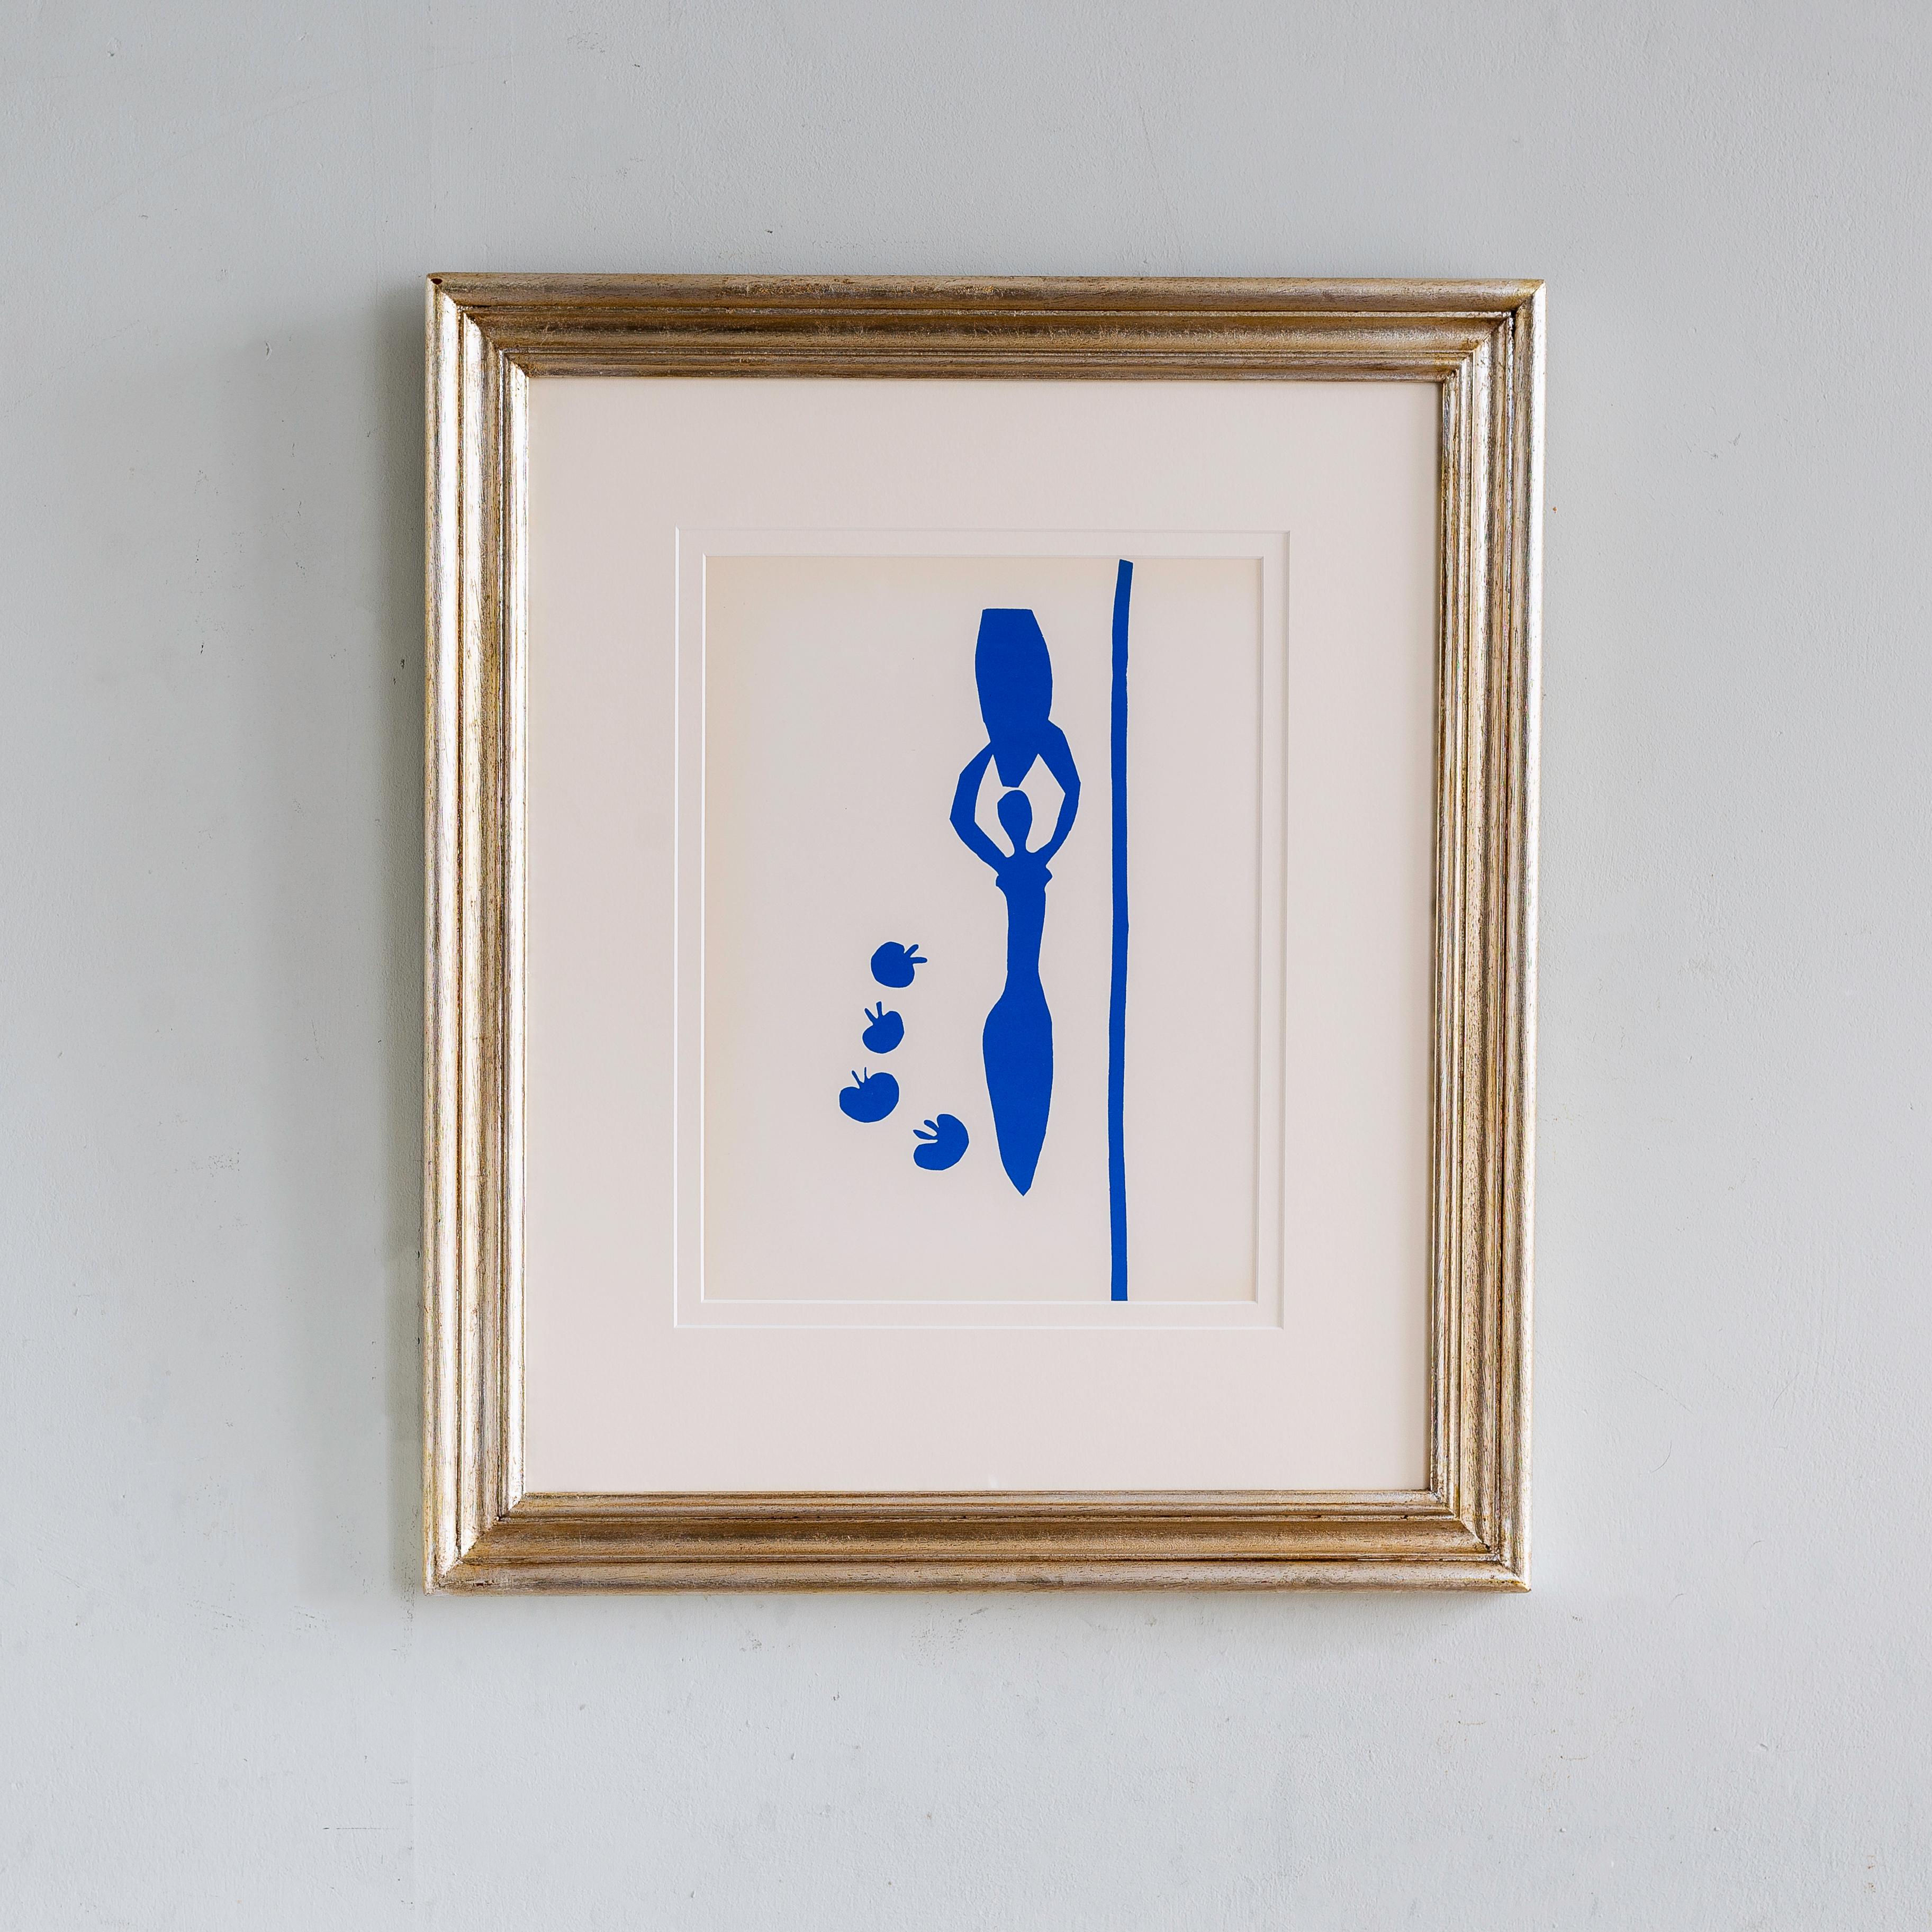 (after) Henri Matisse Abstract Print - Henri Matisse, Nu Bleu I